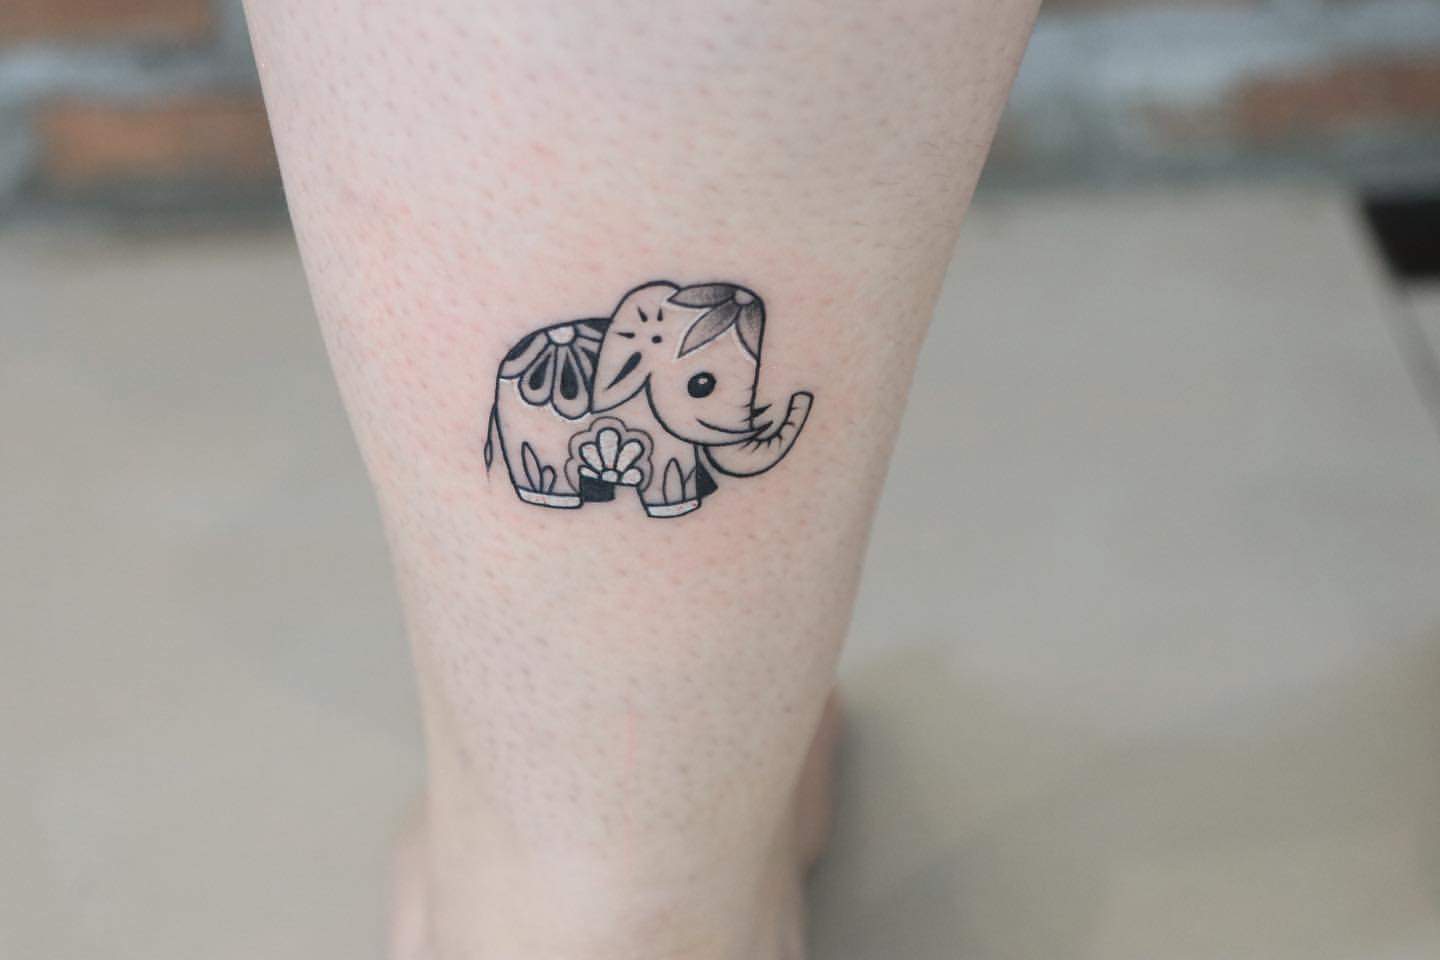 57 Stylish Elephant Shoulder Tattoo Designs - Shoulder Tattoos